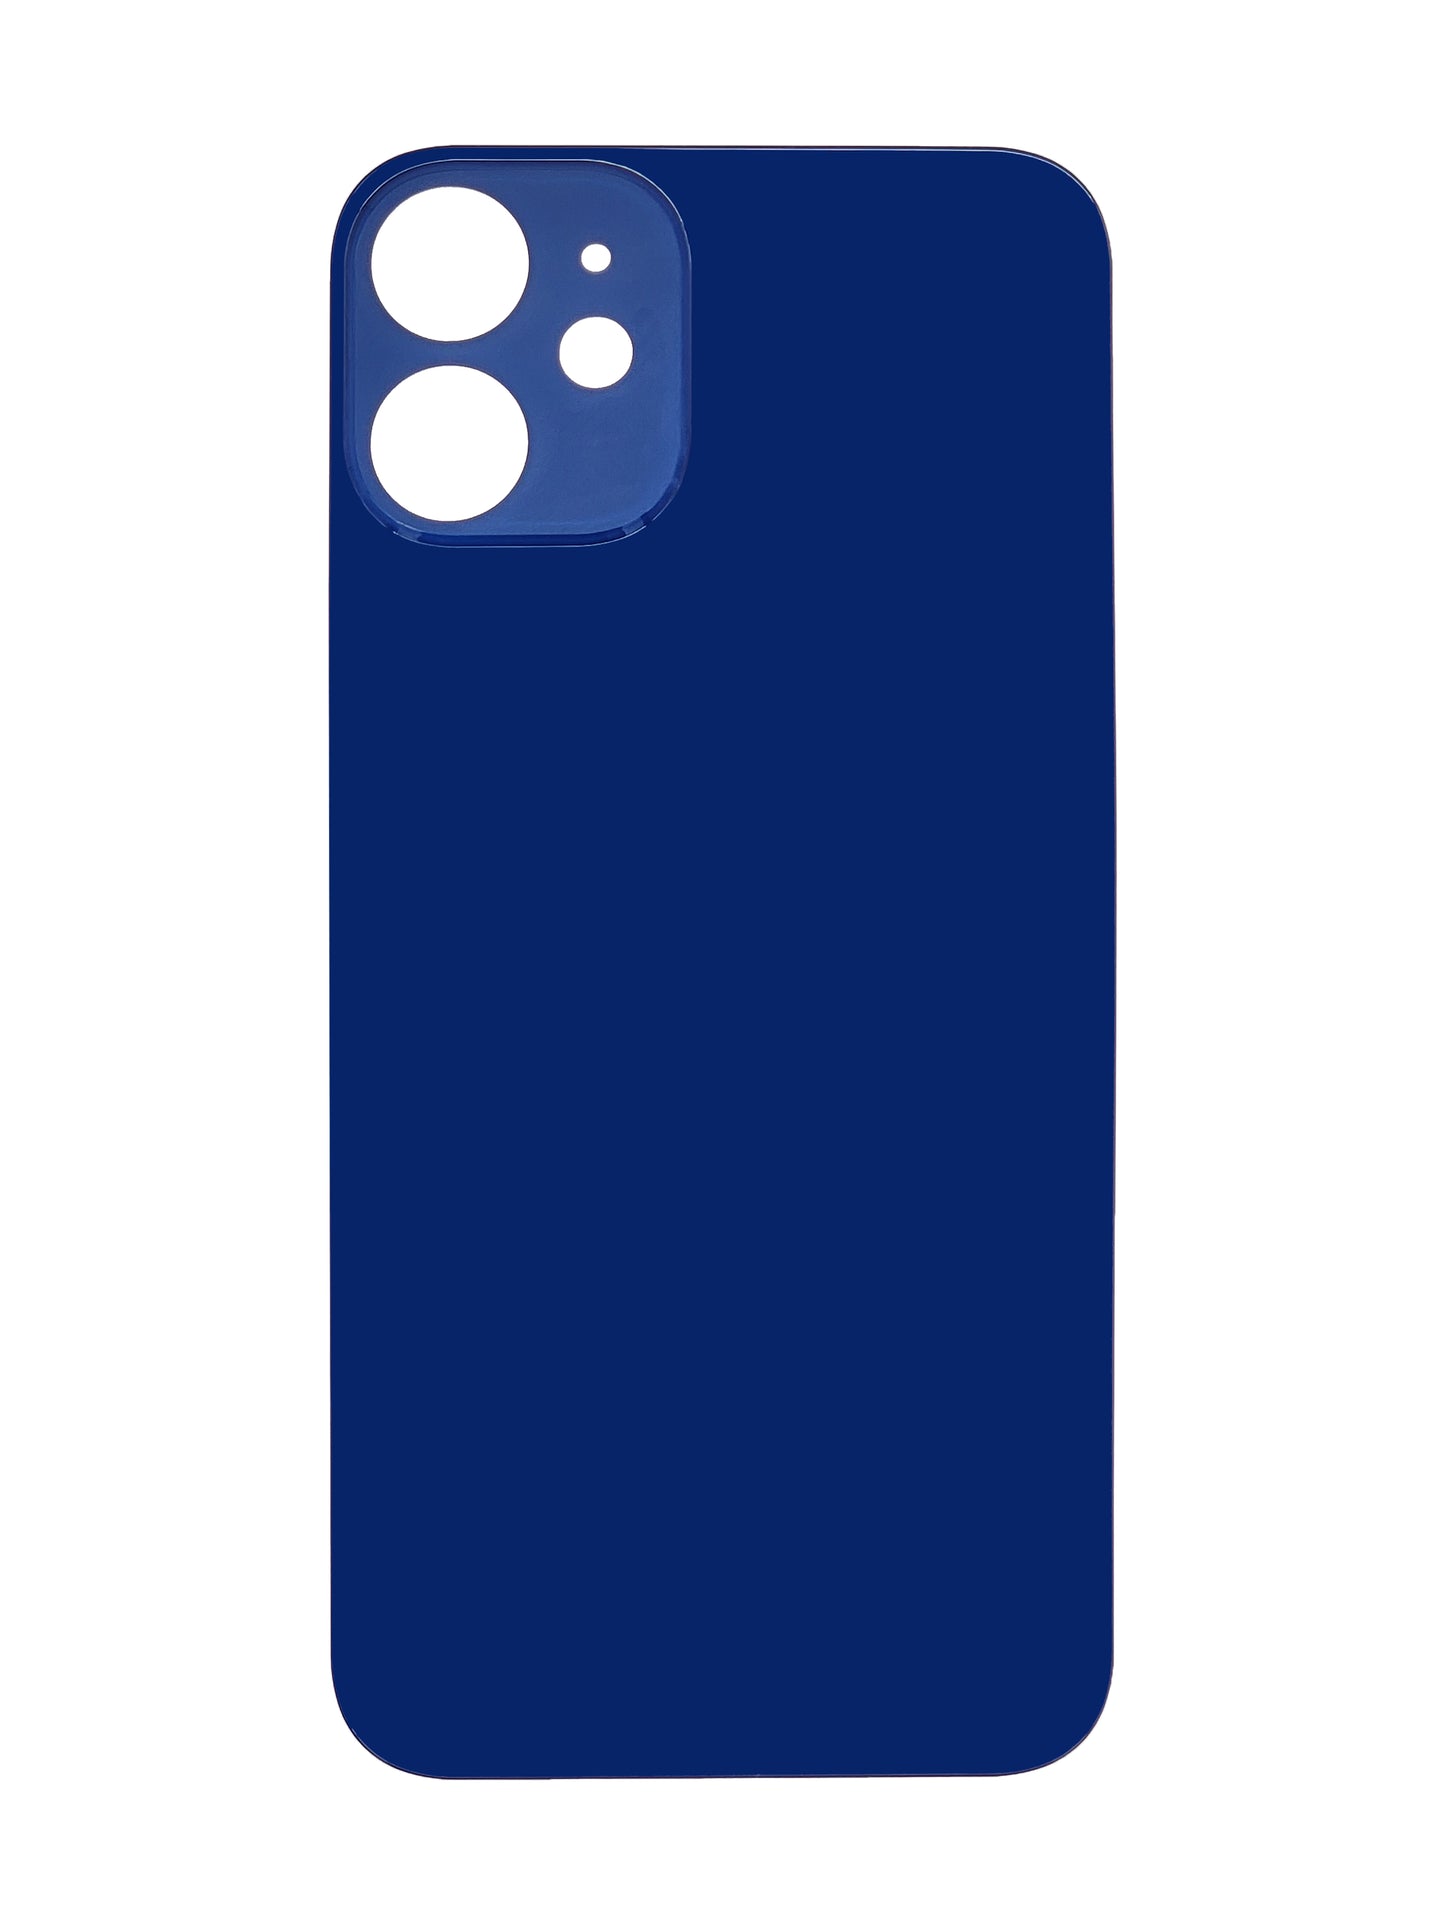 iPhone 12 Mini Back Glass (No Logo) (Blue)